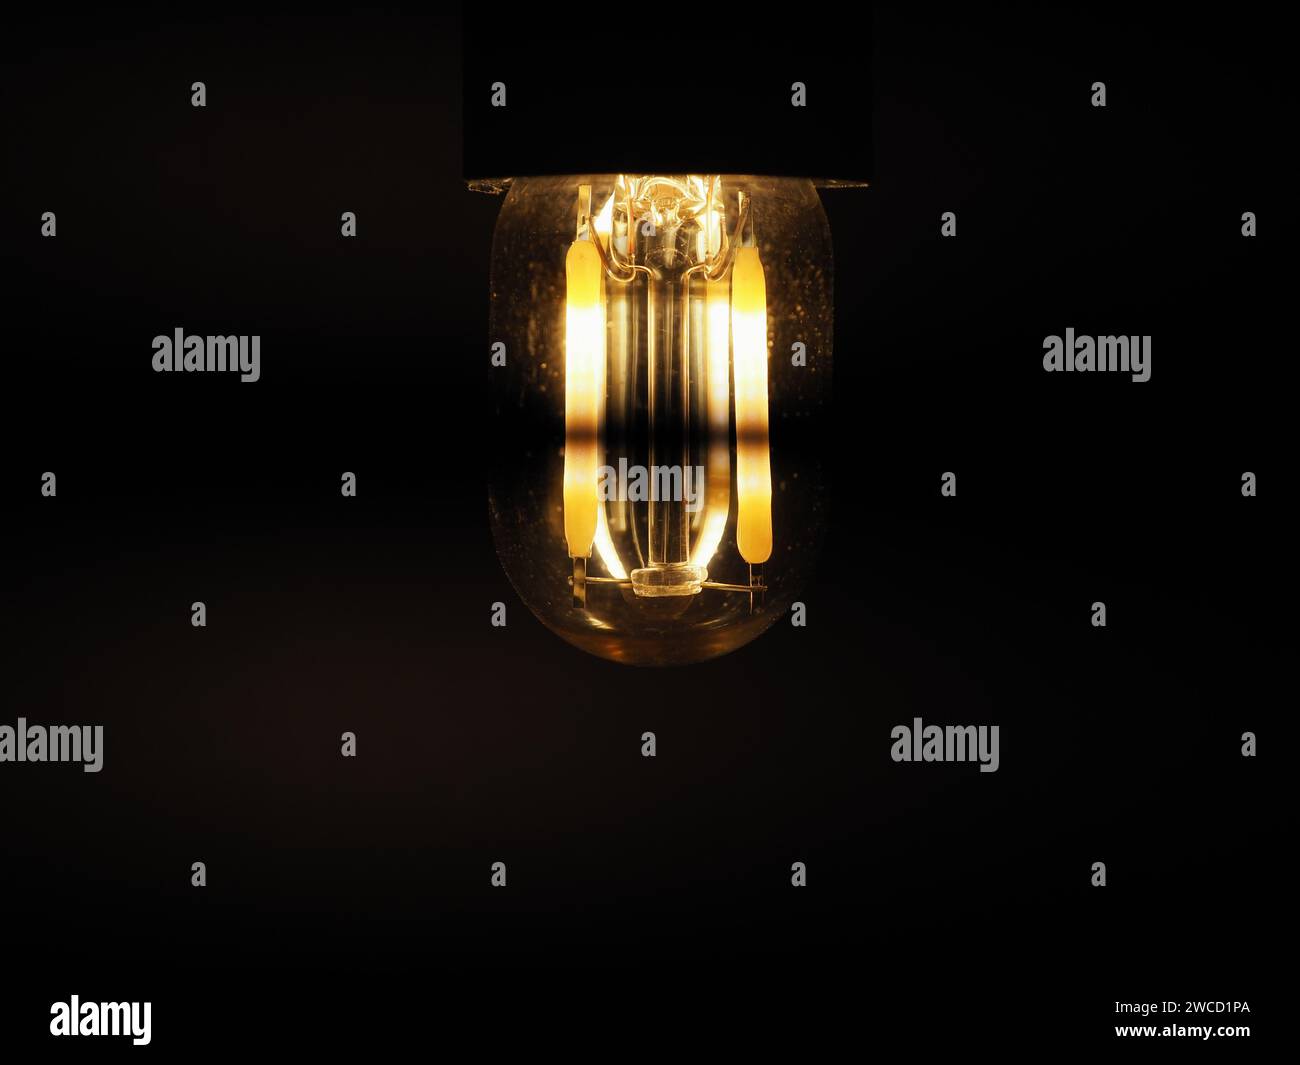 Billige LED-Glühlampe flackert über dunklem Hintergrund Stockfoto